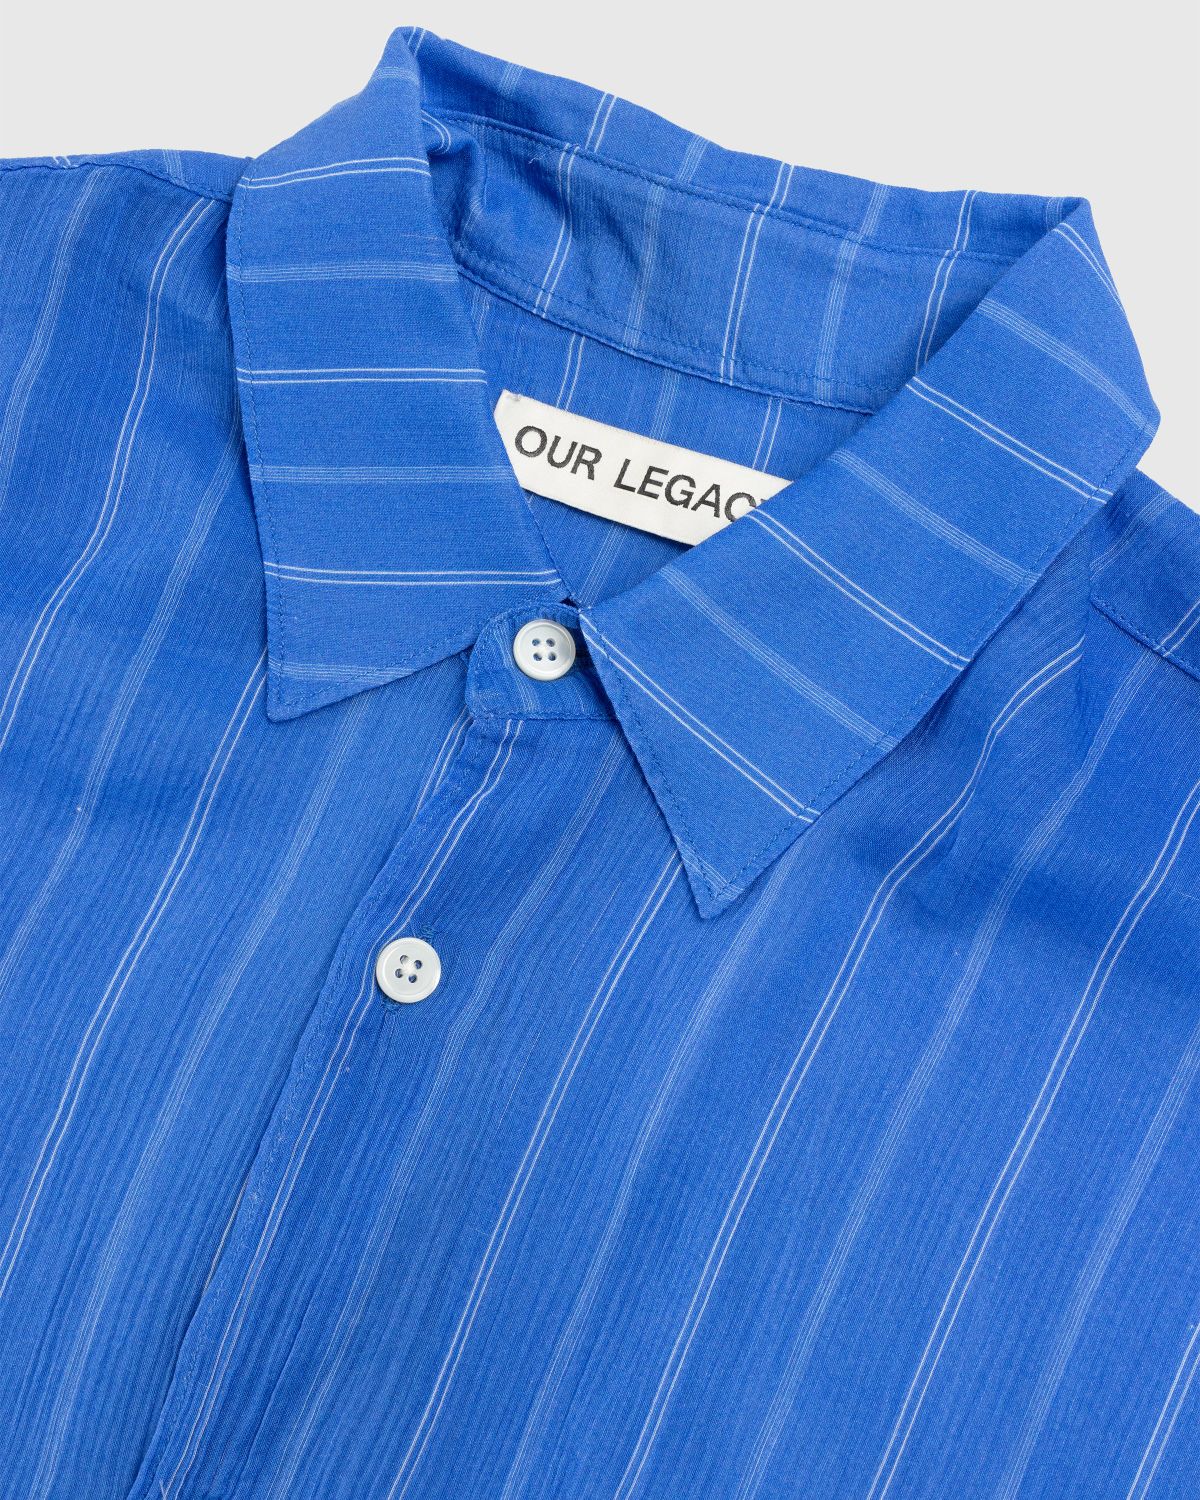 Our Legacy – Initial Shirt Blue Rayon Plait Stripe - Shirts - Blue - Image 5